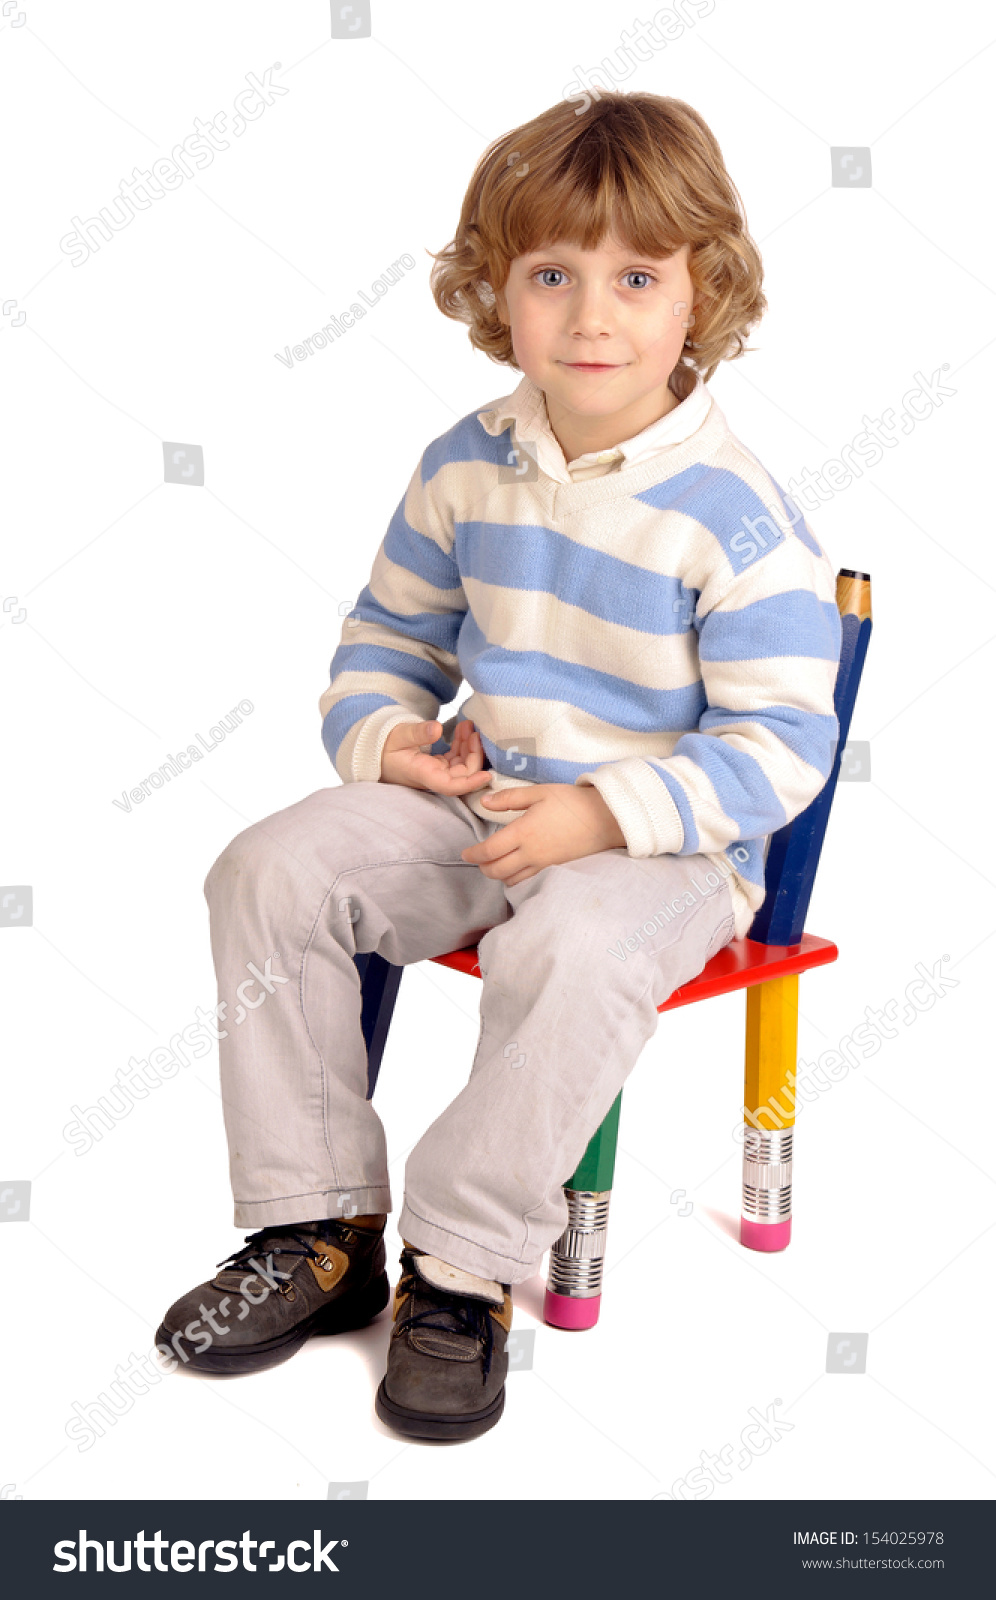 Little Boy Sitting Chair Stock Photo 154025978 - Shutterstock